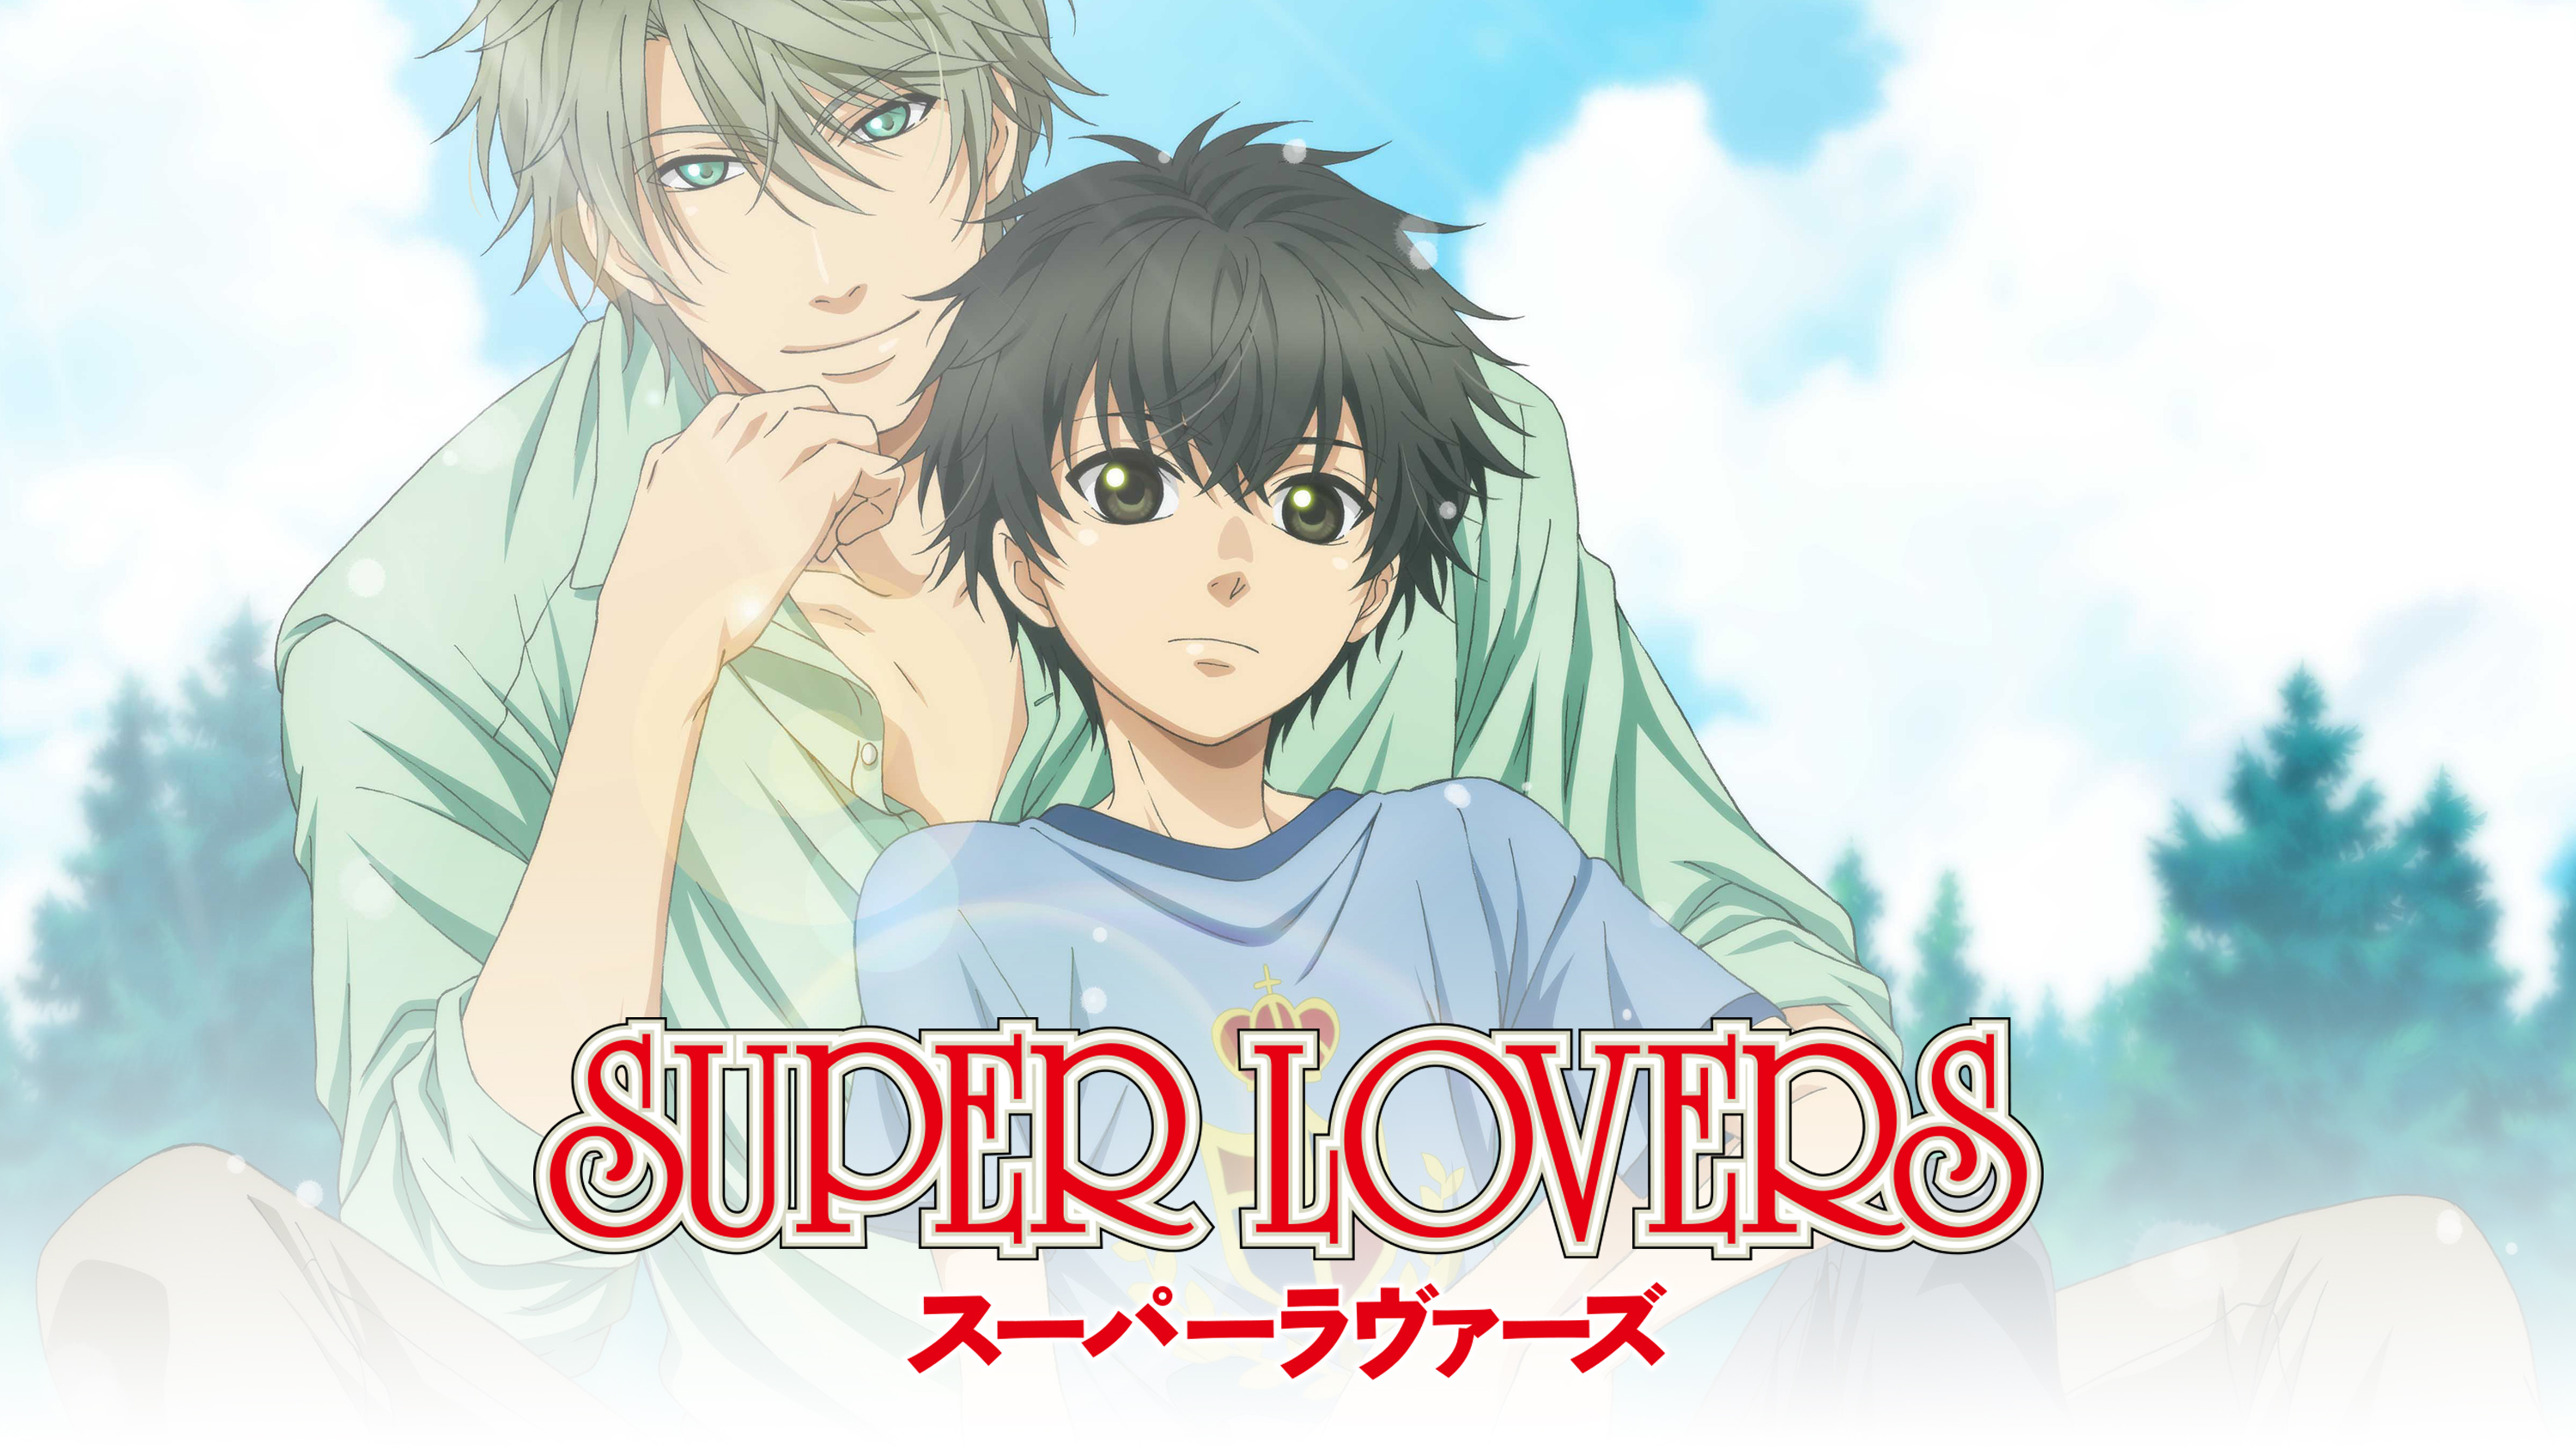 Watch Super Lovers Sub Dub Drama Romance Slice Of Life Anime Funimation